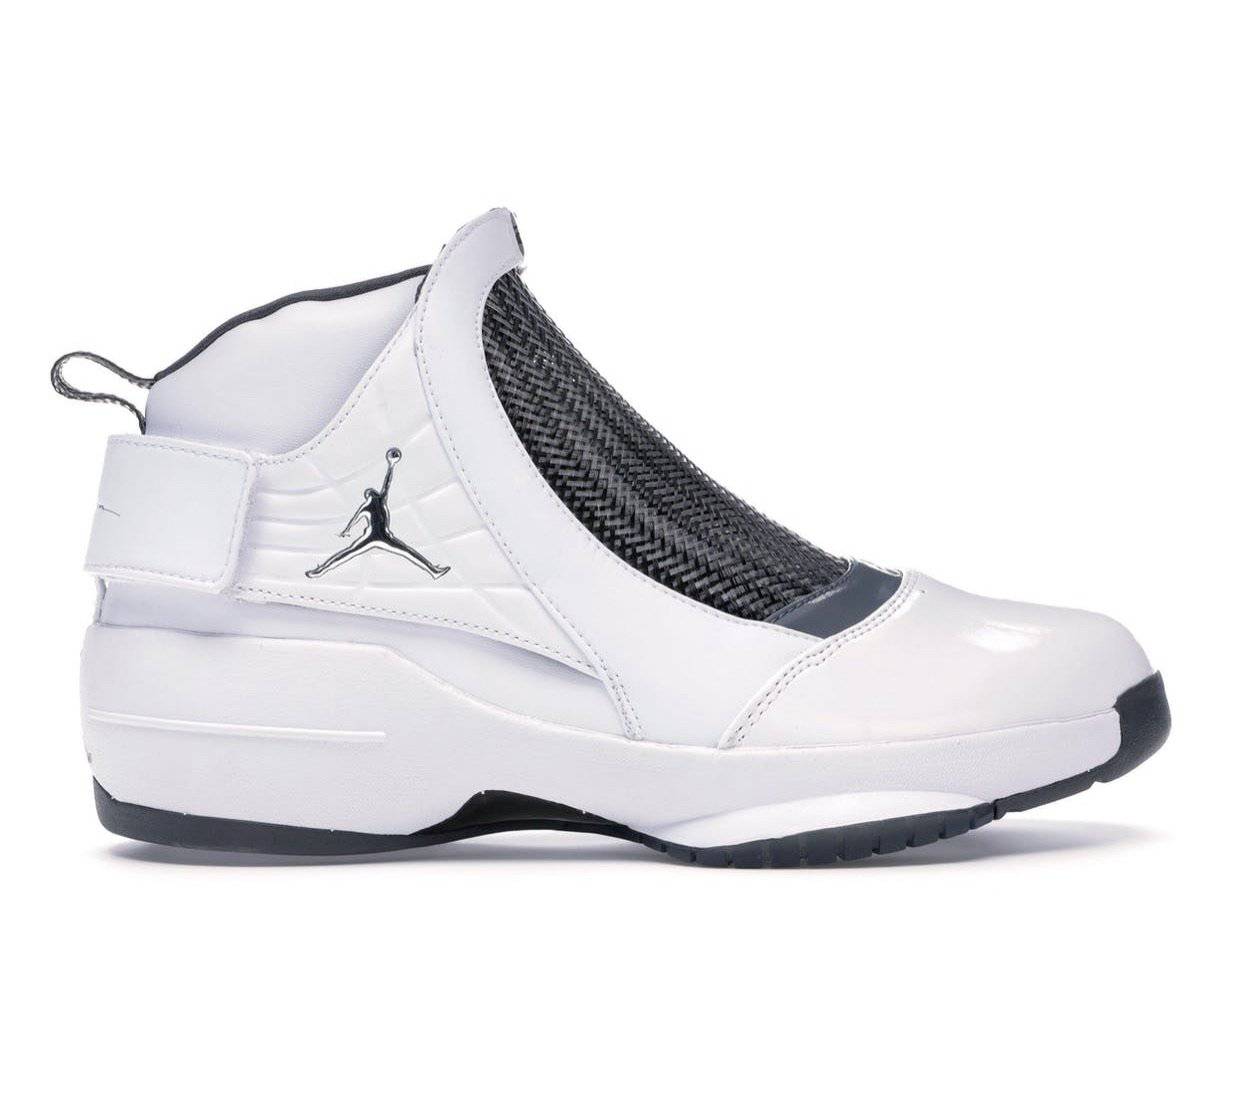 Air Jordan 19 Retro “White Flint Grey”